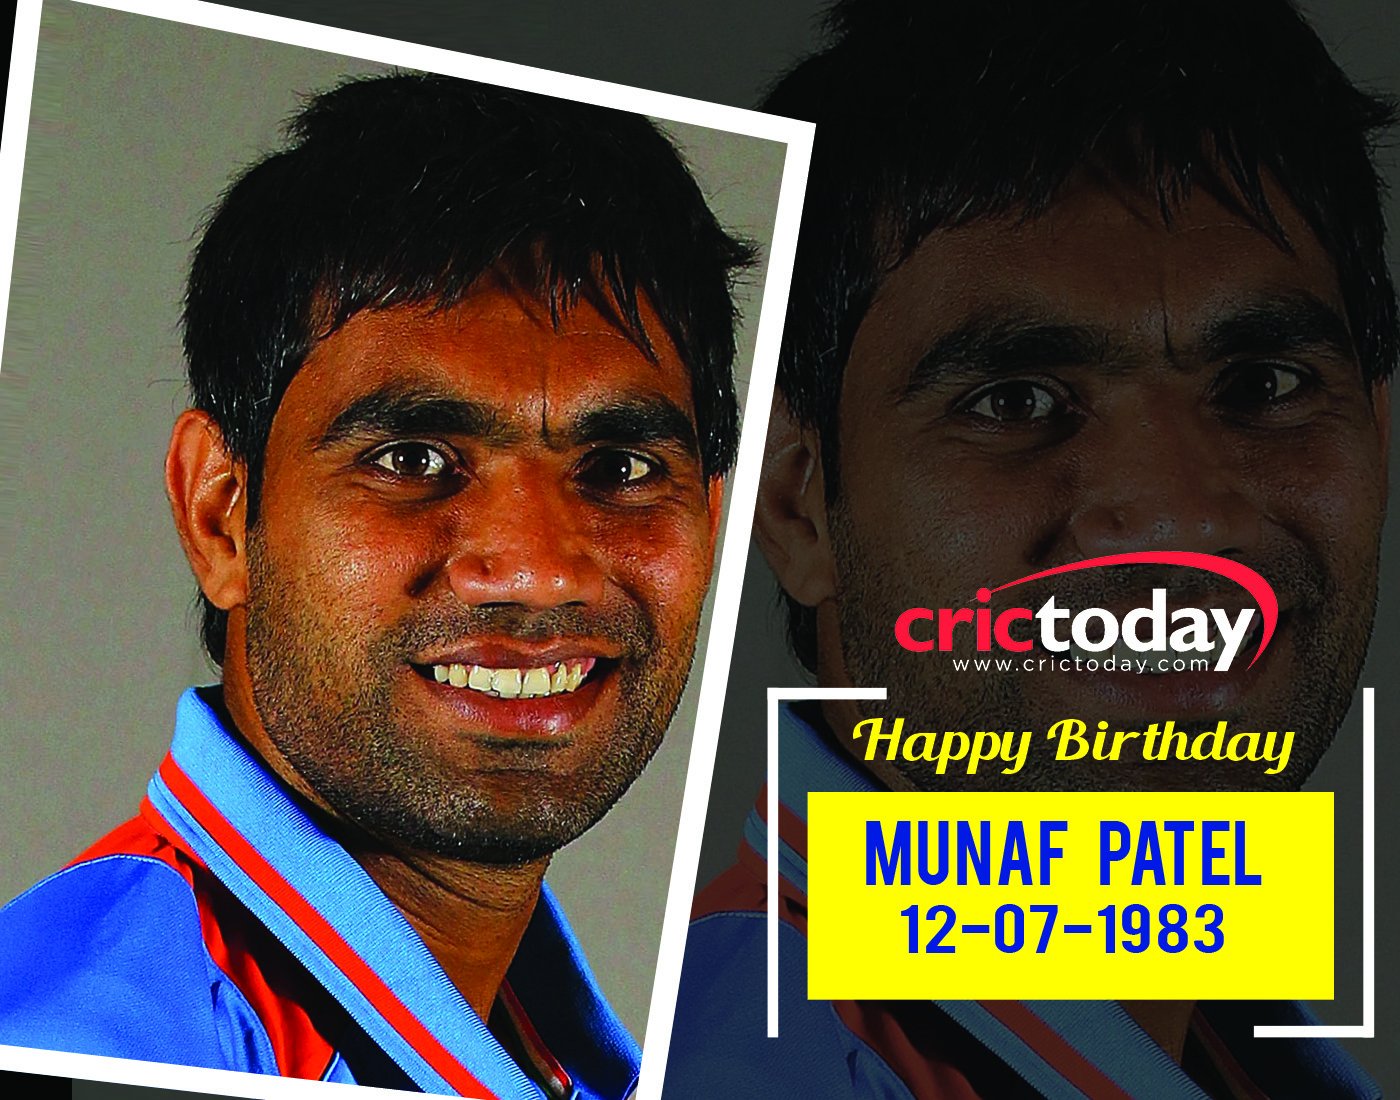  Happy Birthday Munaf Patel 